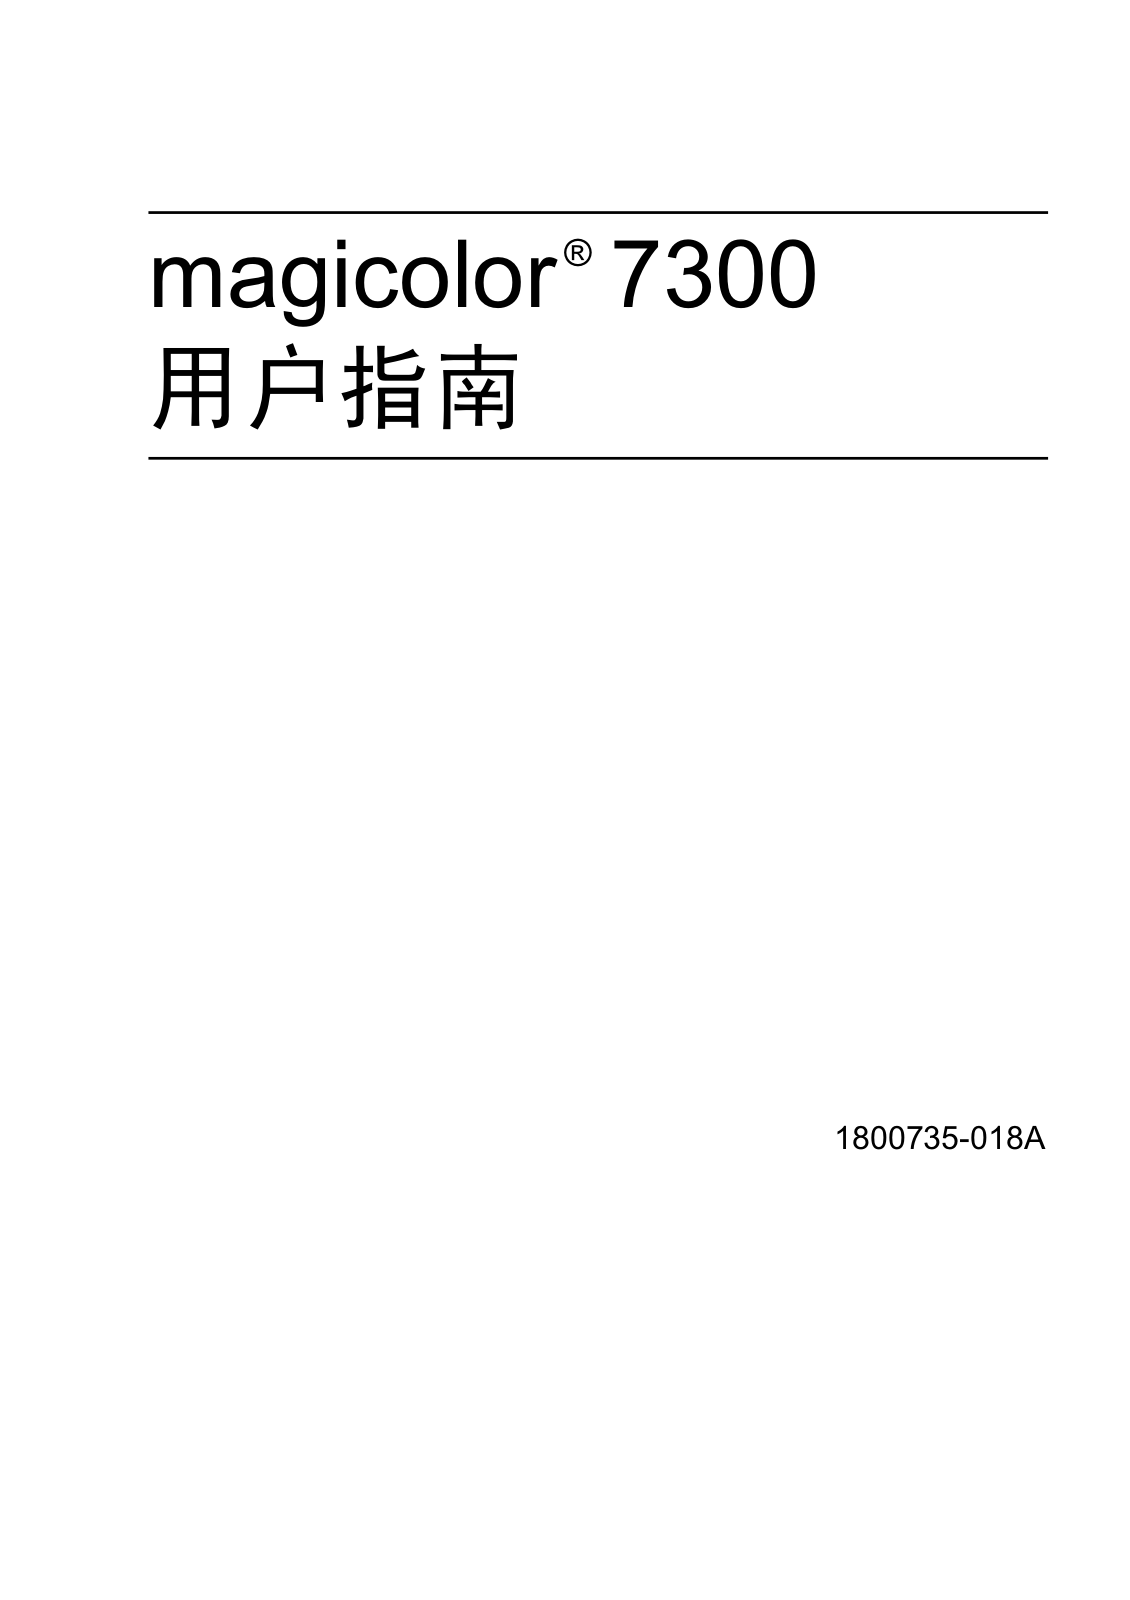 Konica Minolta 7300 User Guide